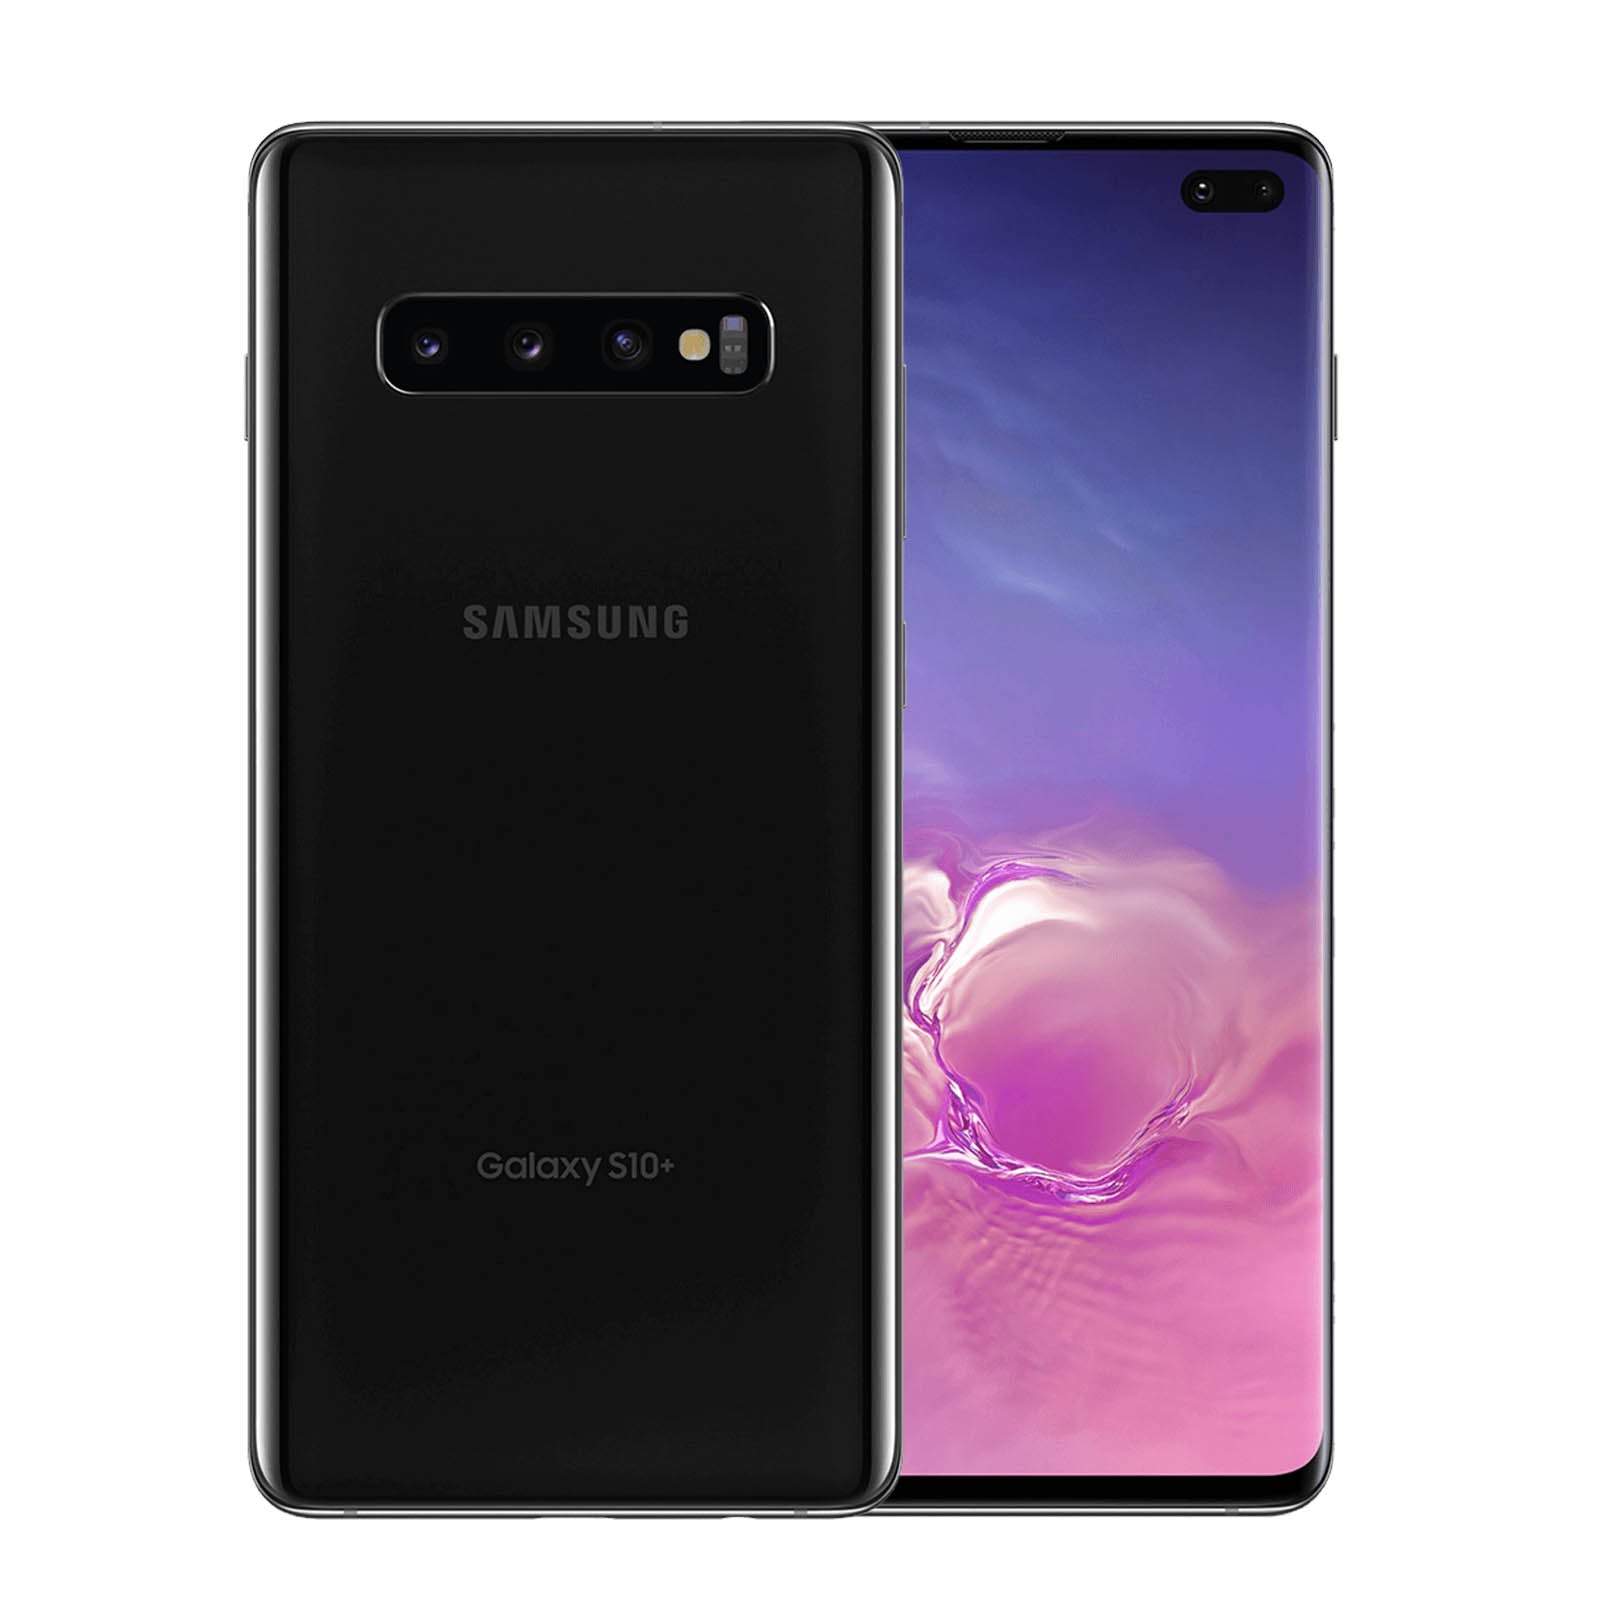 Samsung Galaxy S10 Plus 001TB Prism Black Very good - Unlocked